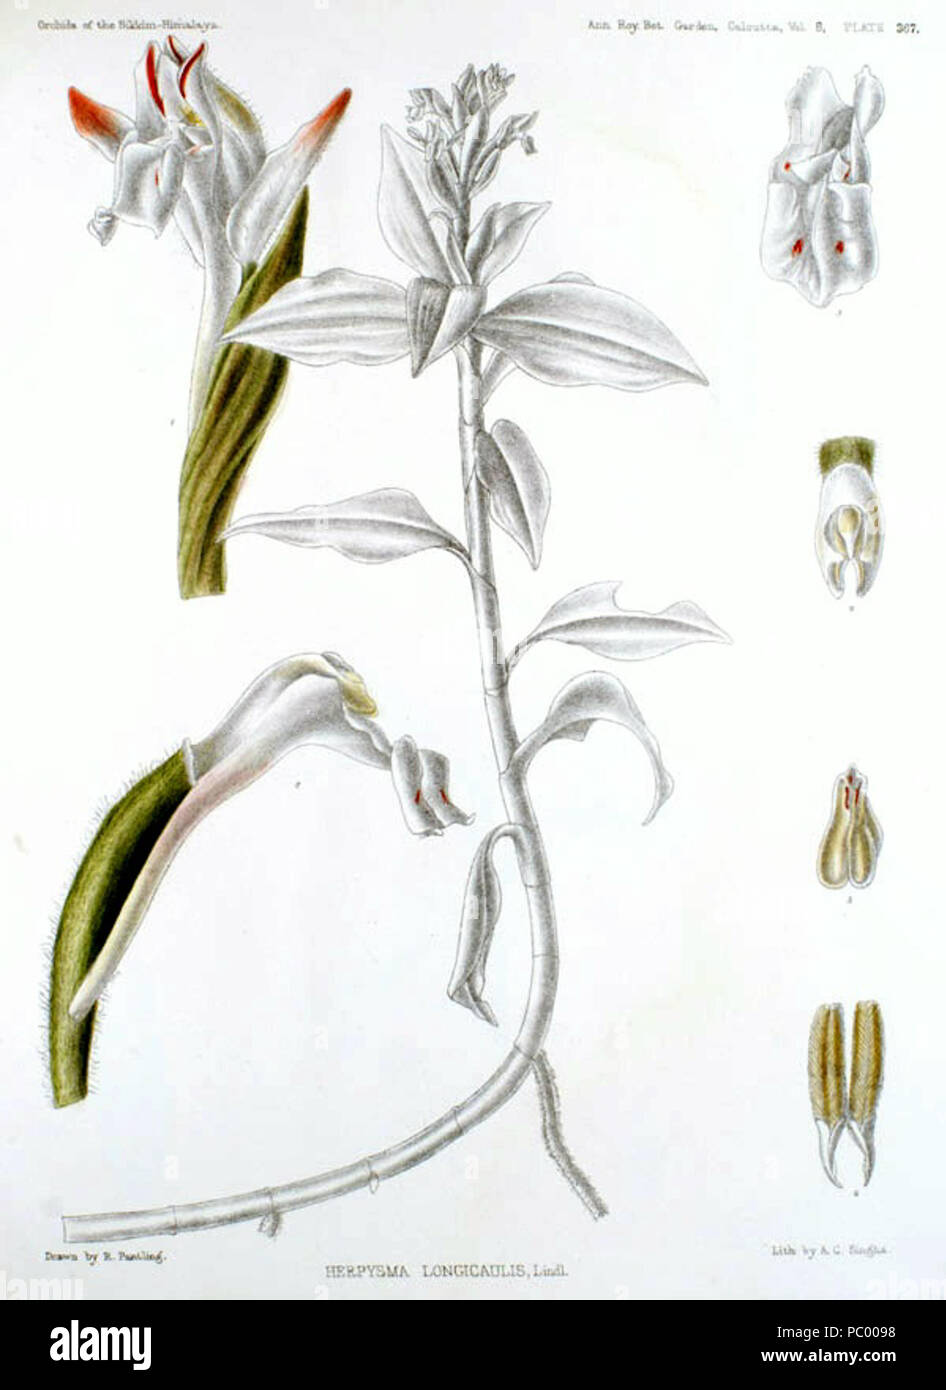 277 Herpysma longicaulis - The Orchids of the Sikkim-Himalaya pl 367 (1898) Stock Photo